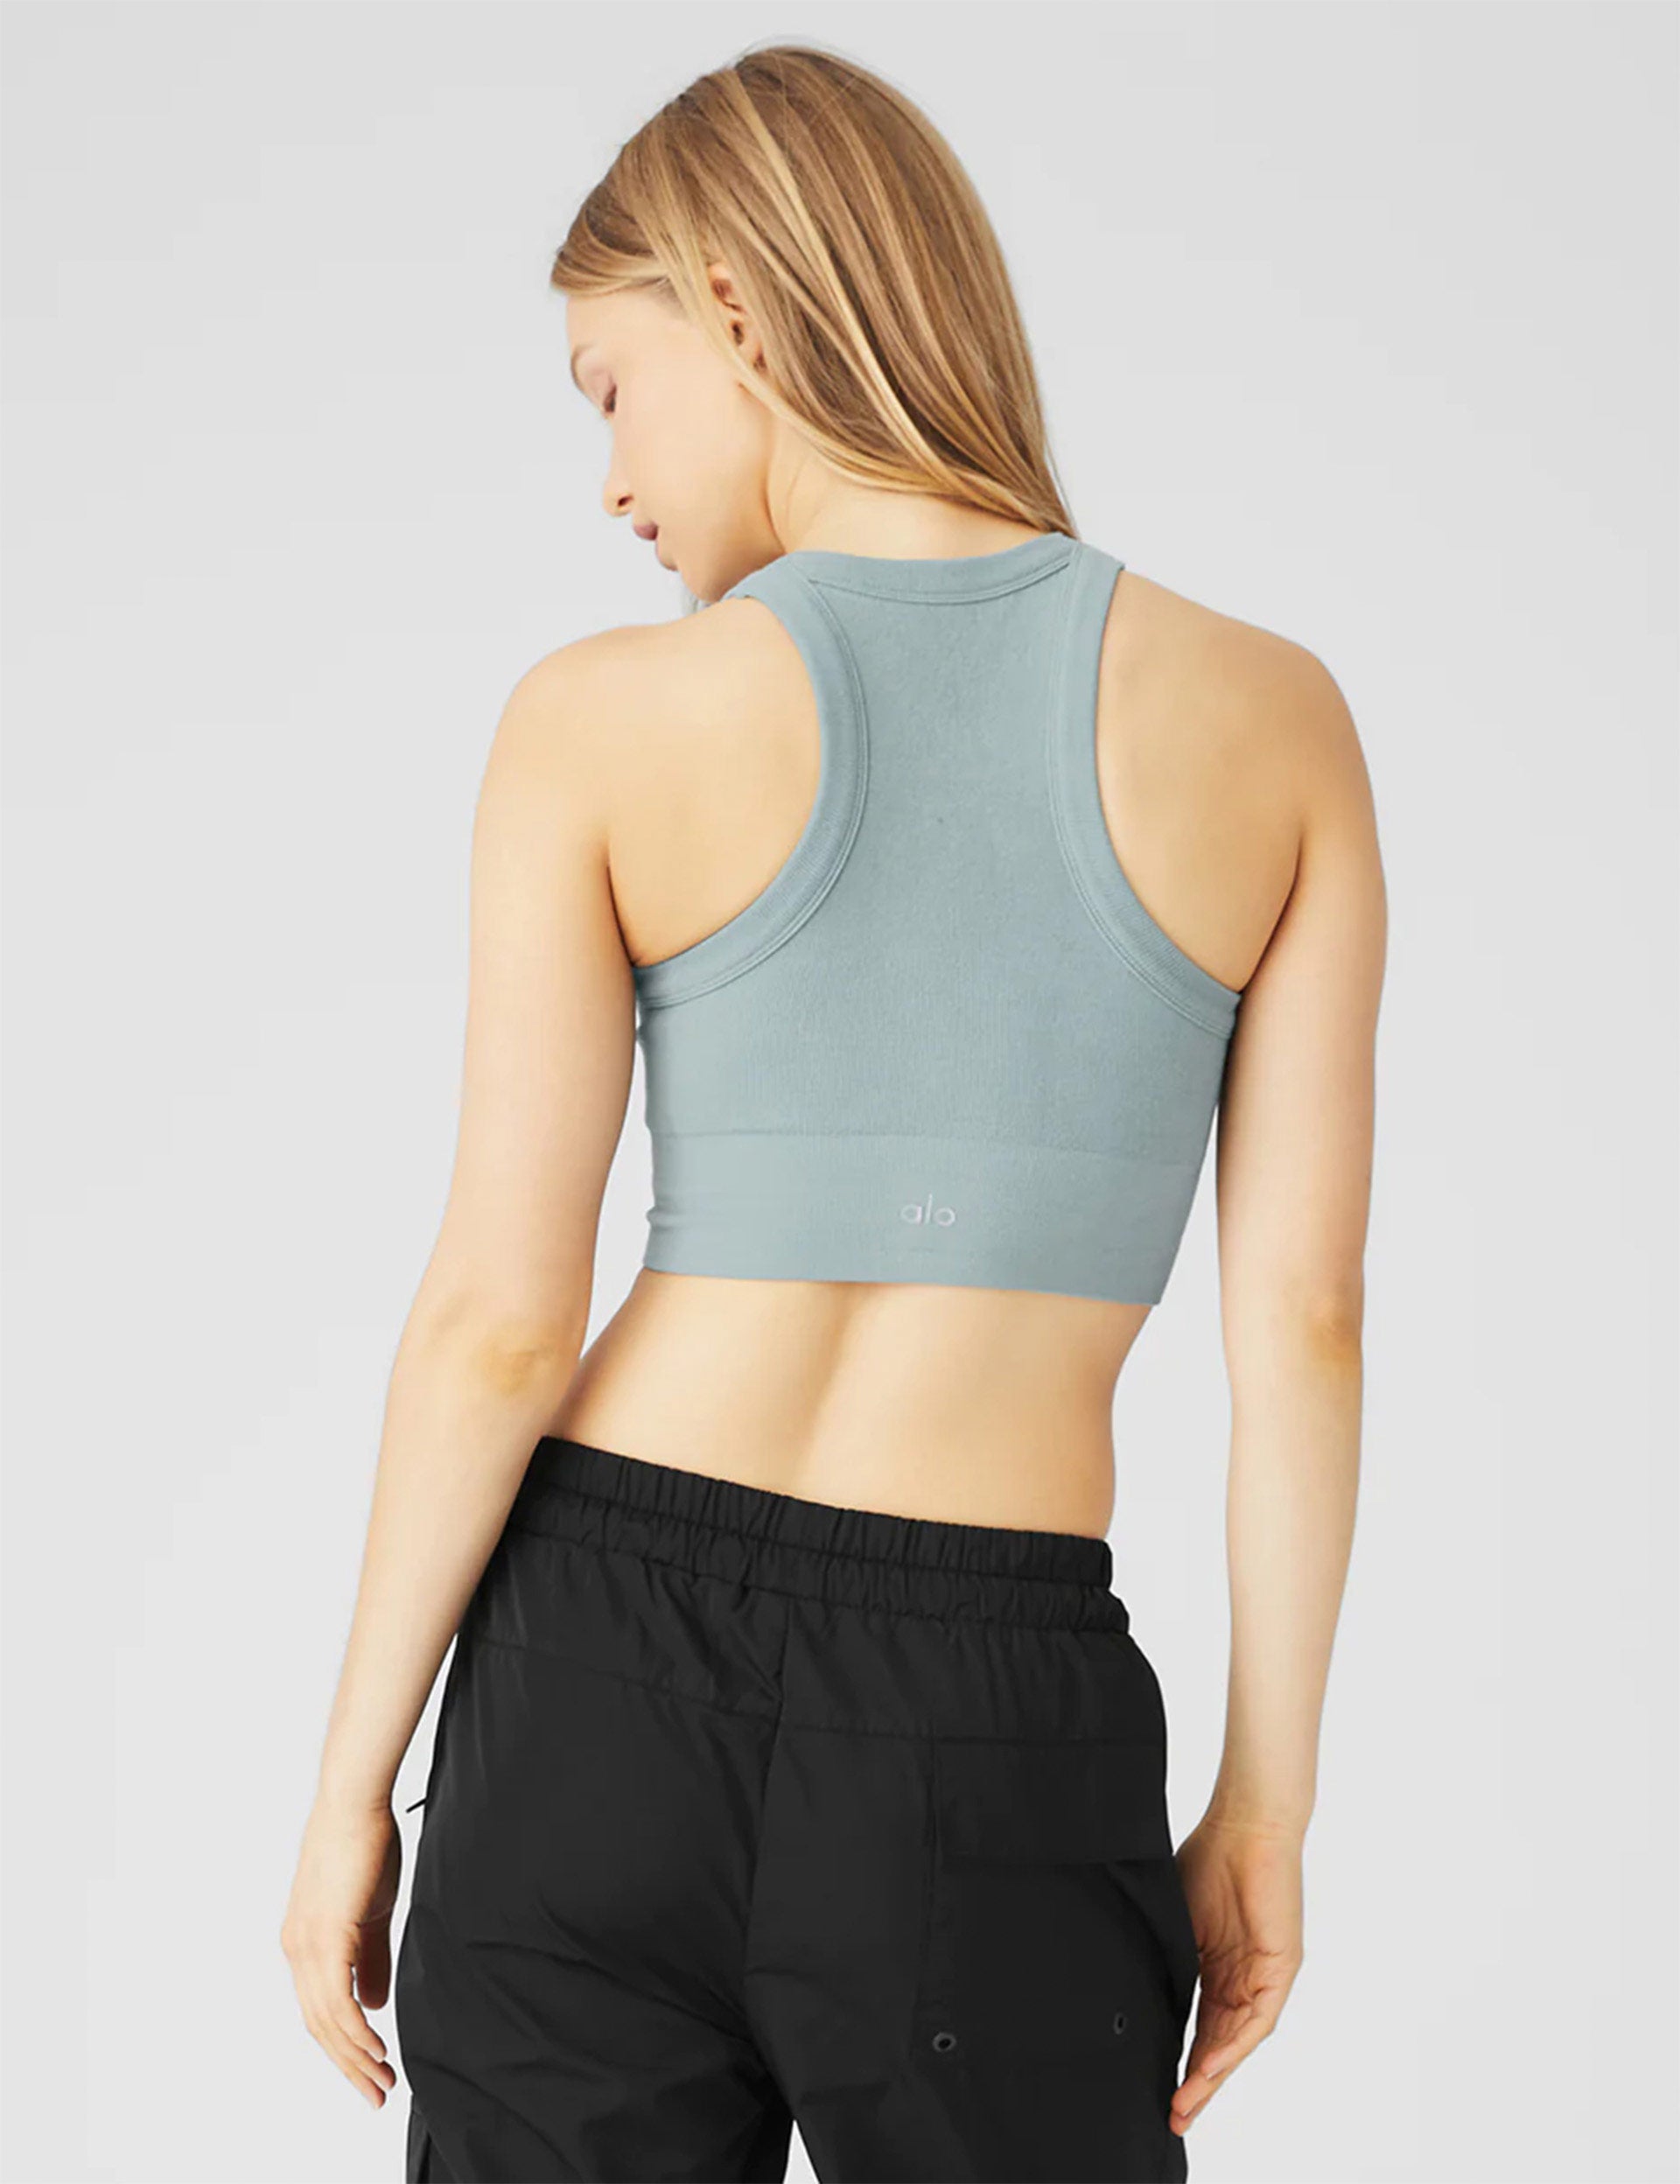 Alo Yoga ALO seamless delight high neck bra Size XS - $36 - From Jessica